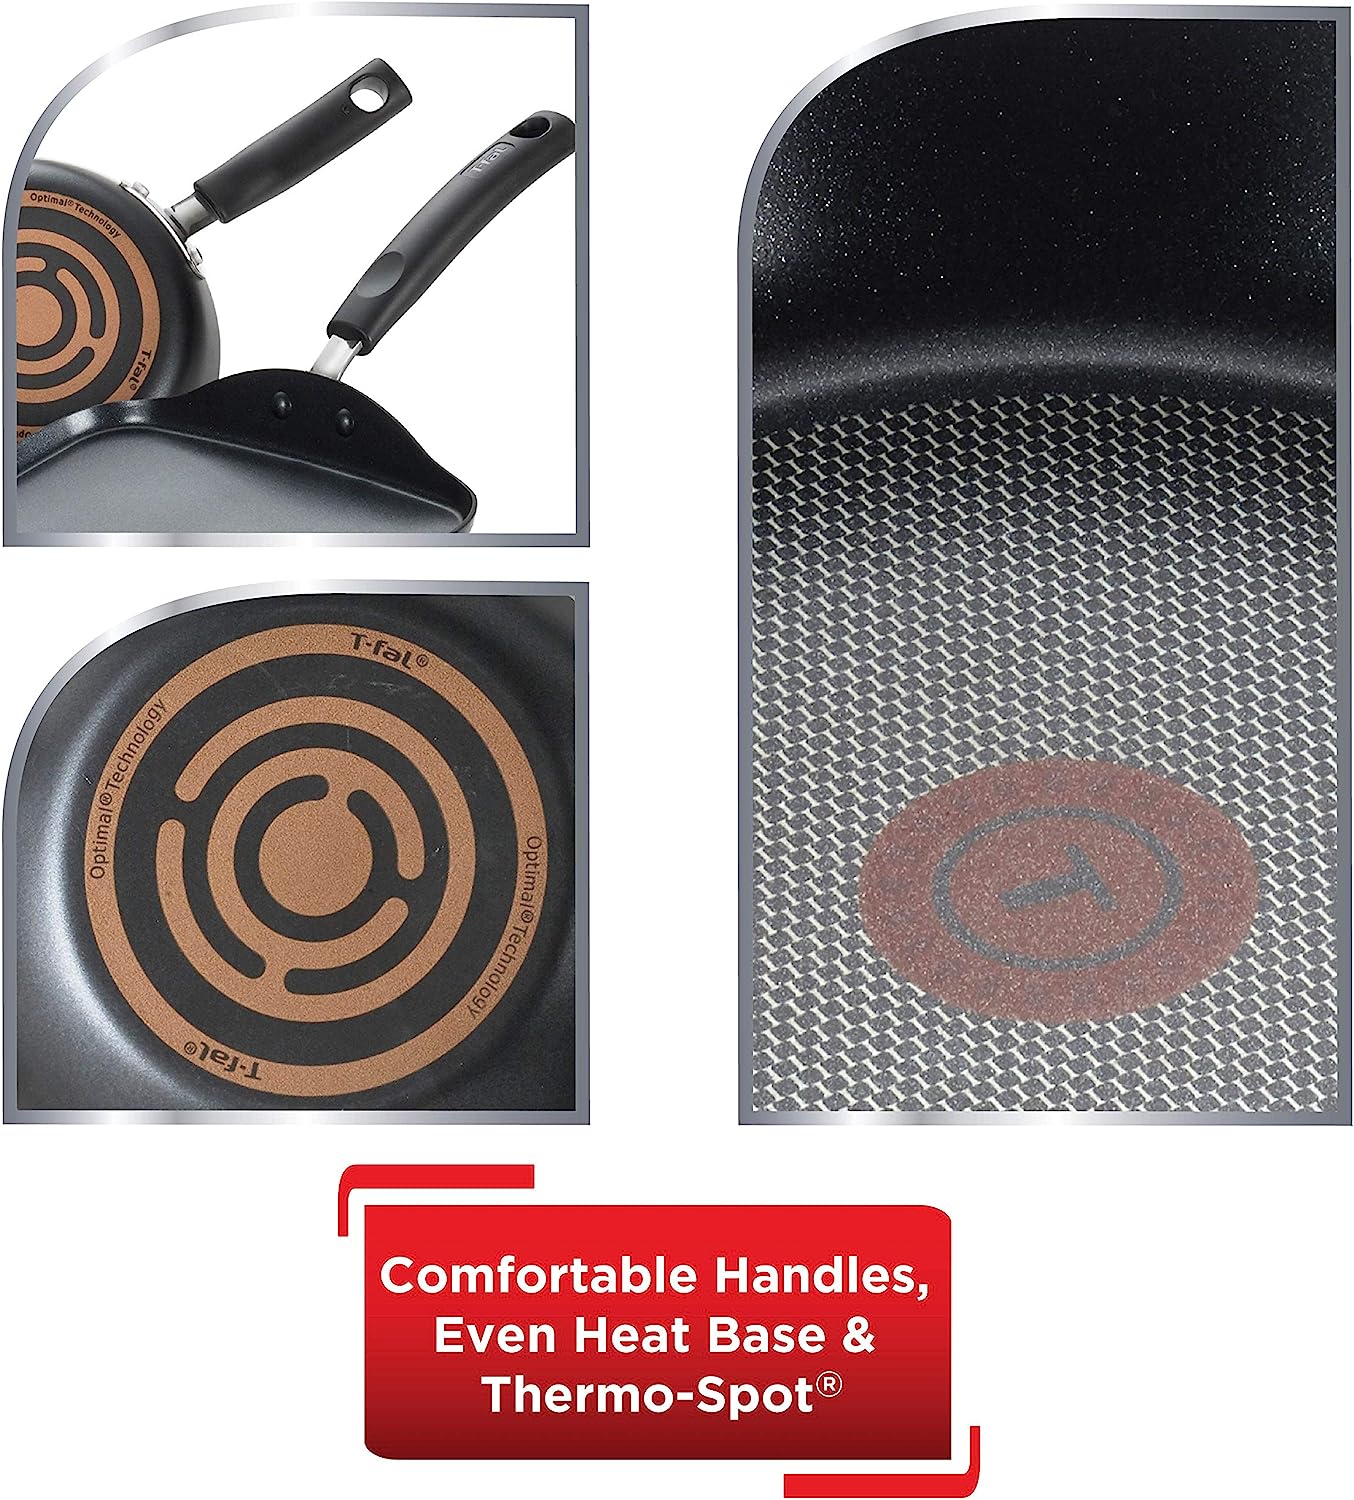 T-fal Signature Nonstick Cookware Set 12 Piece Oven Safe 350F Pots and  Pans, Dishwasher Safe Black